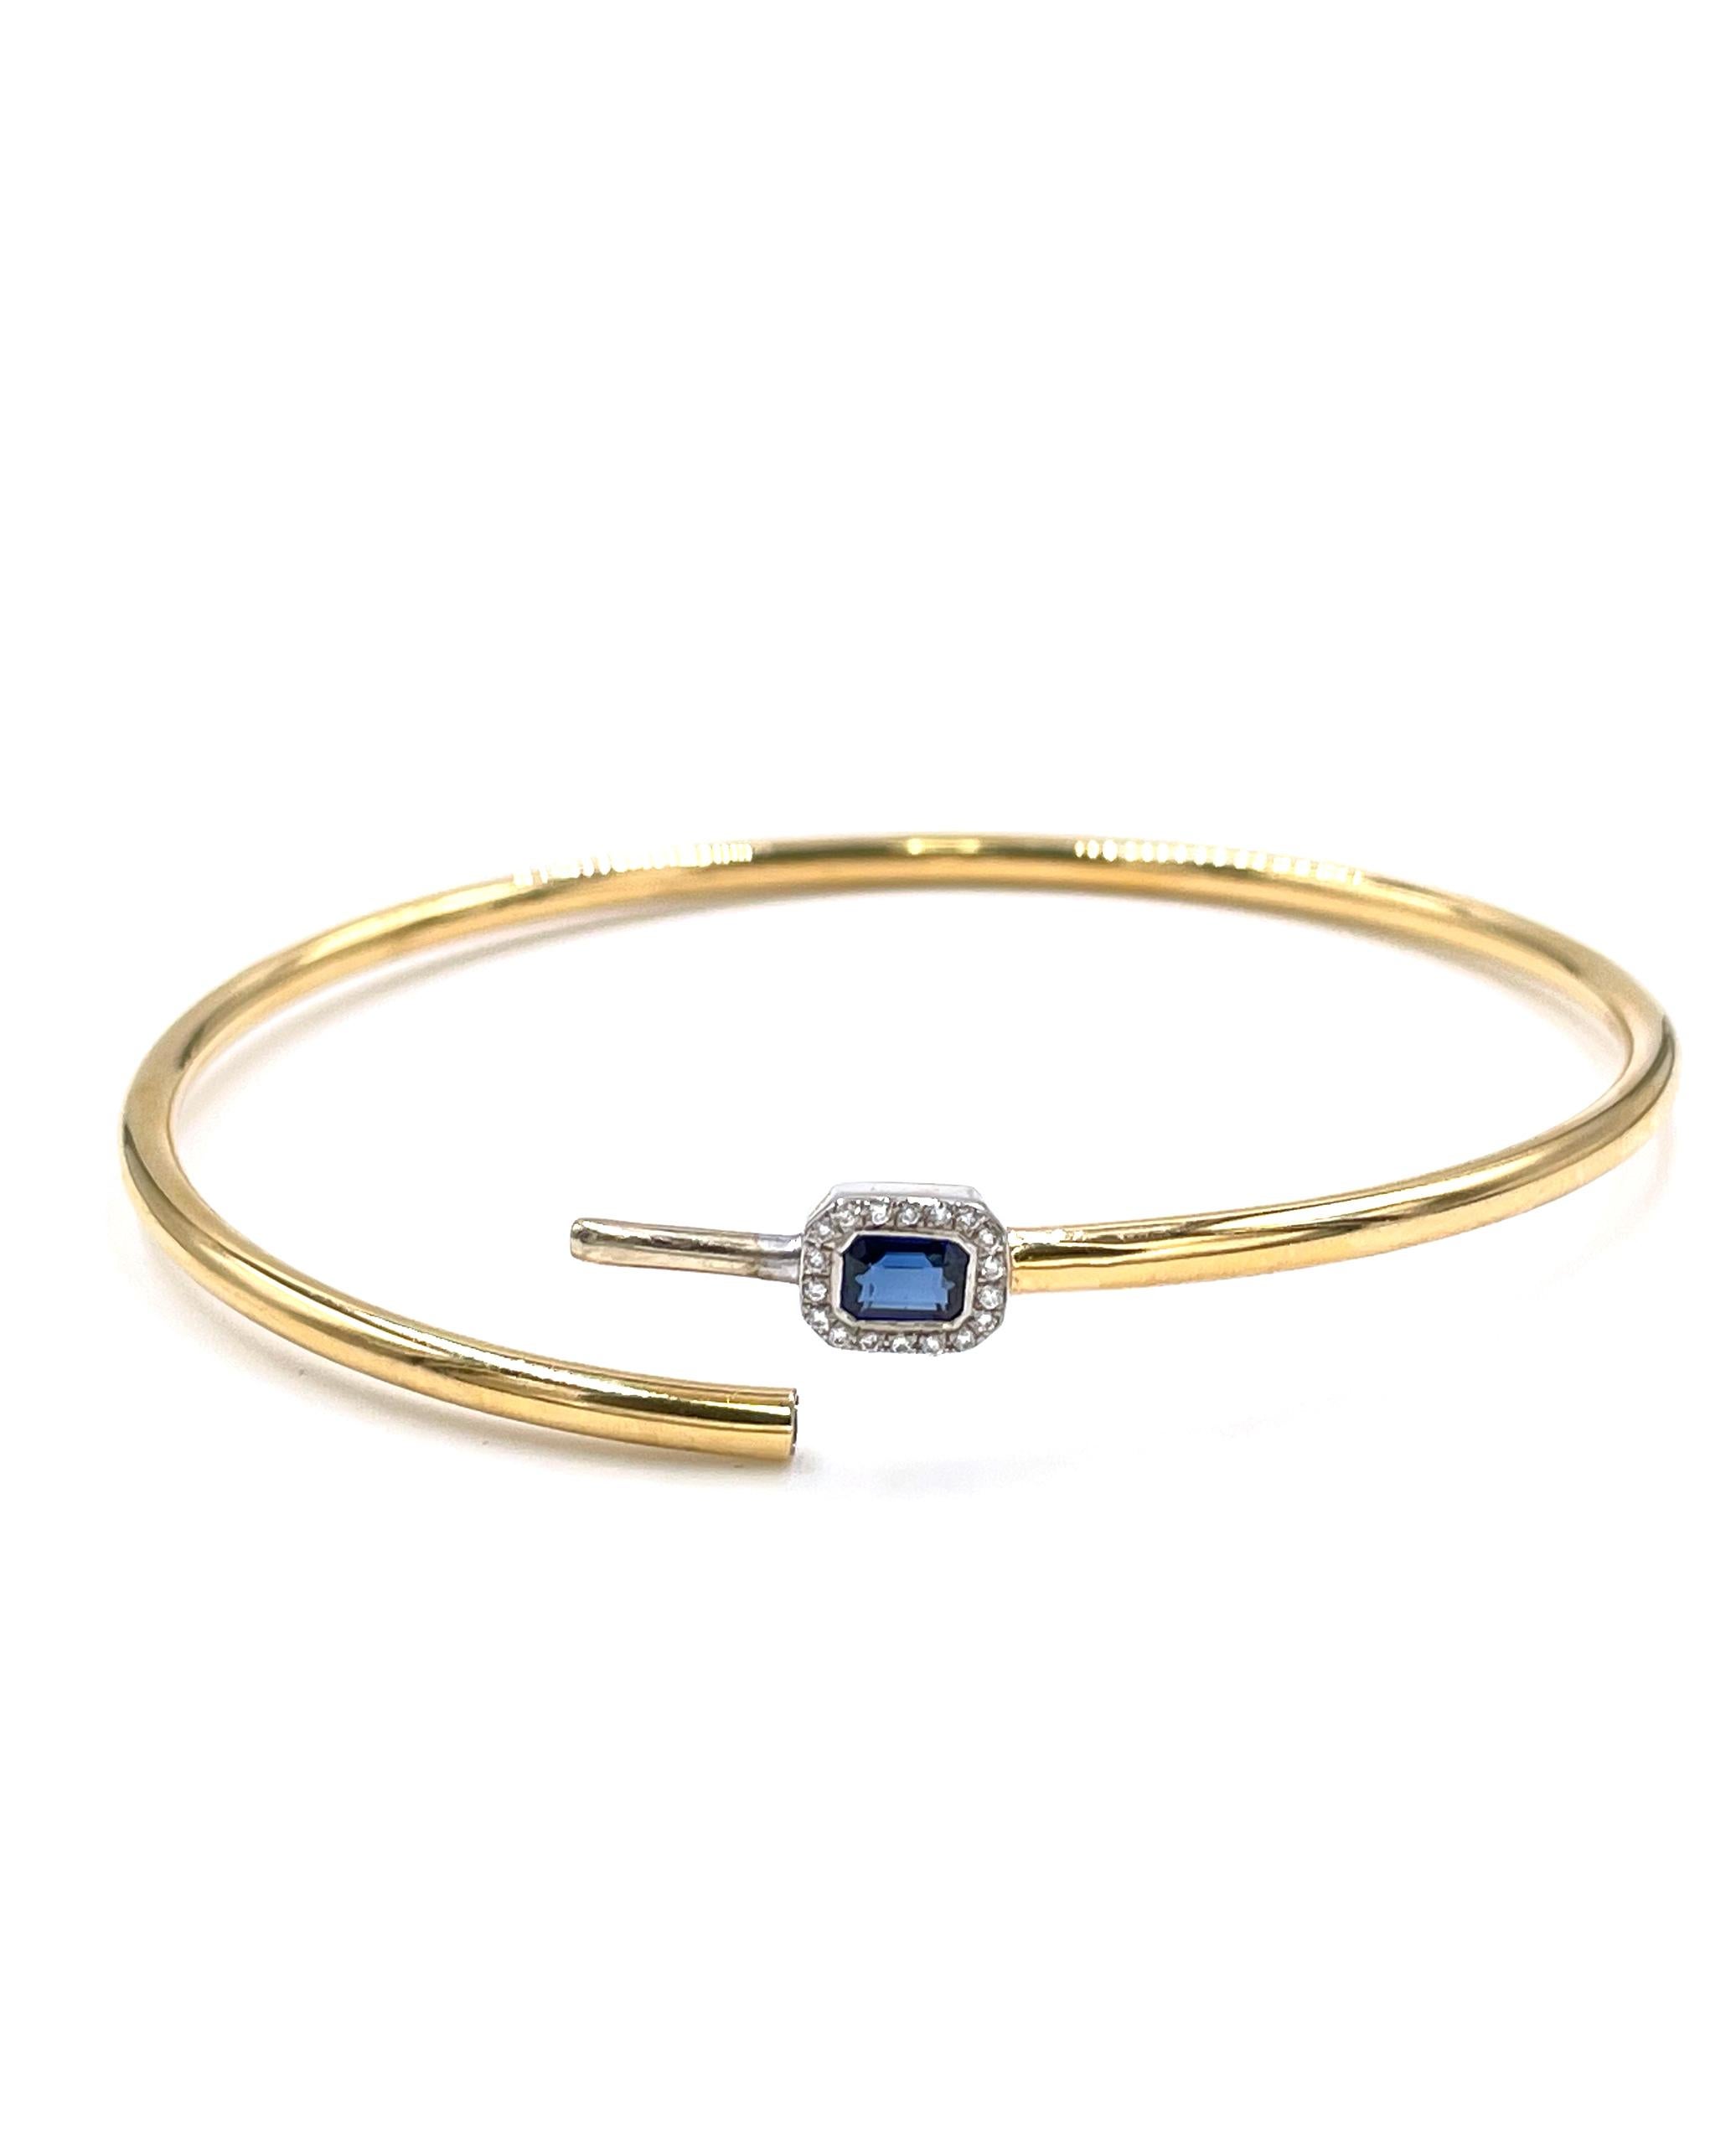 Emerald Cut Simon G. 18K Gold Bangle Bracelet with Diamonds and Sapphire - LB2494 For Sale